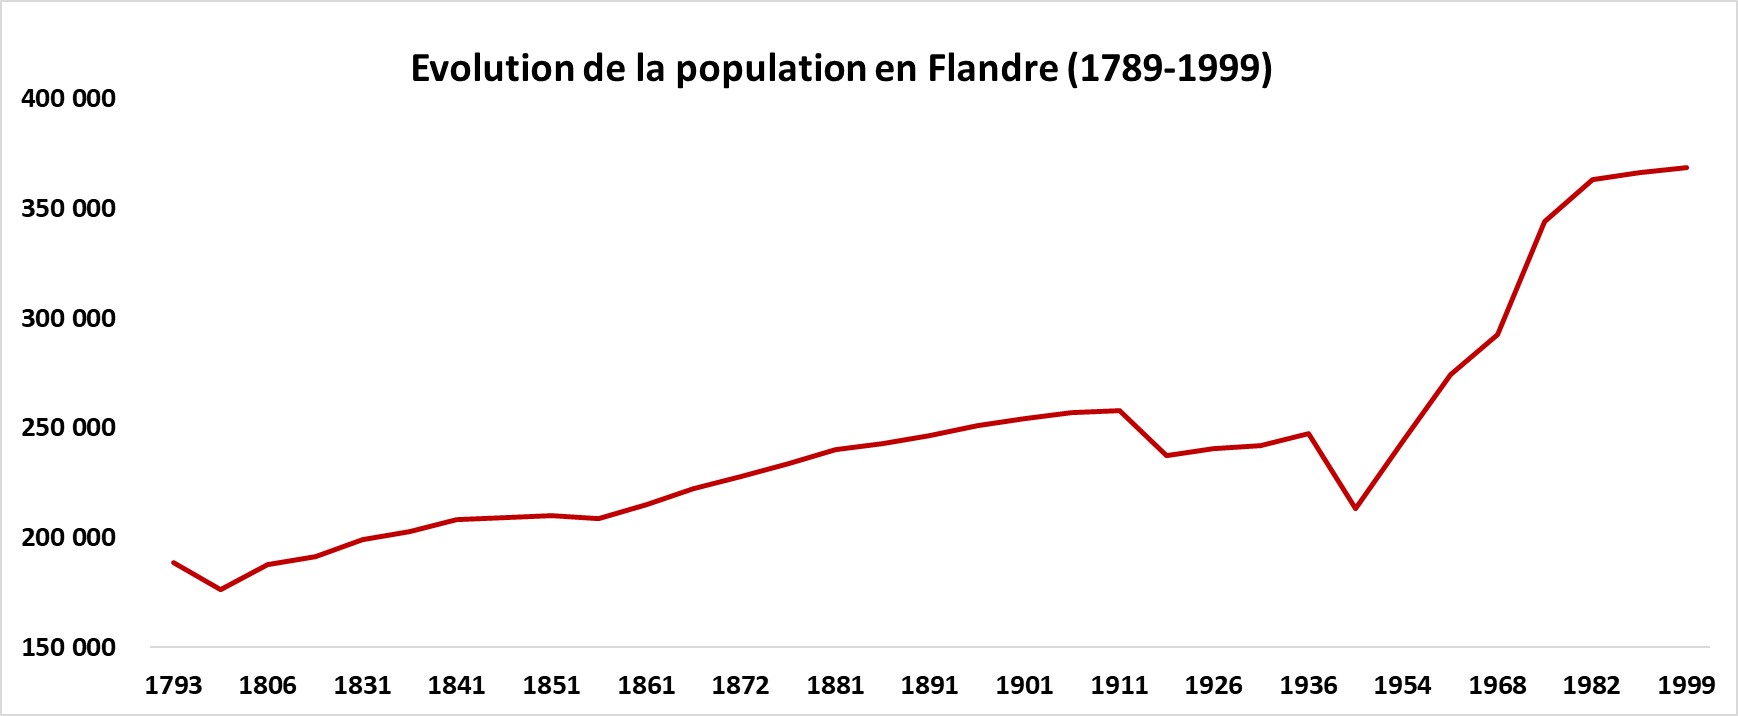 Evolution de la population en Flandre (1789-1999)